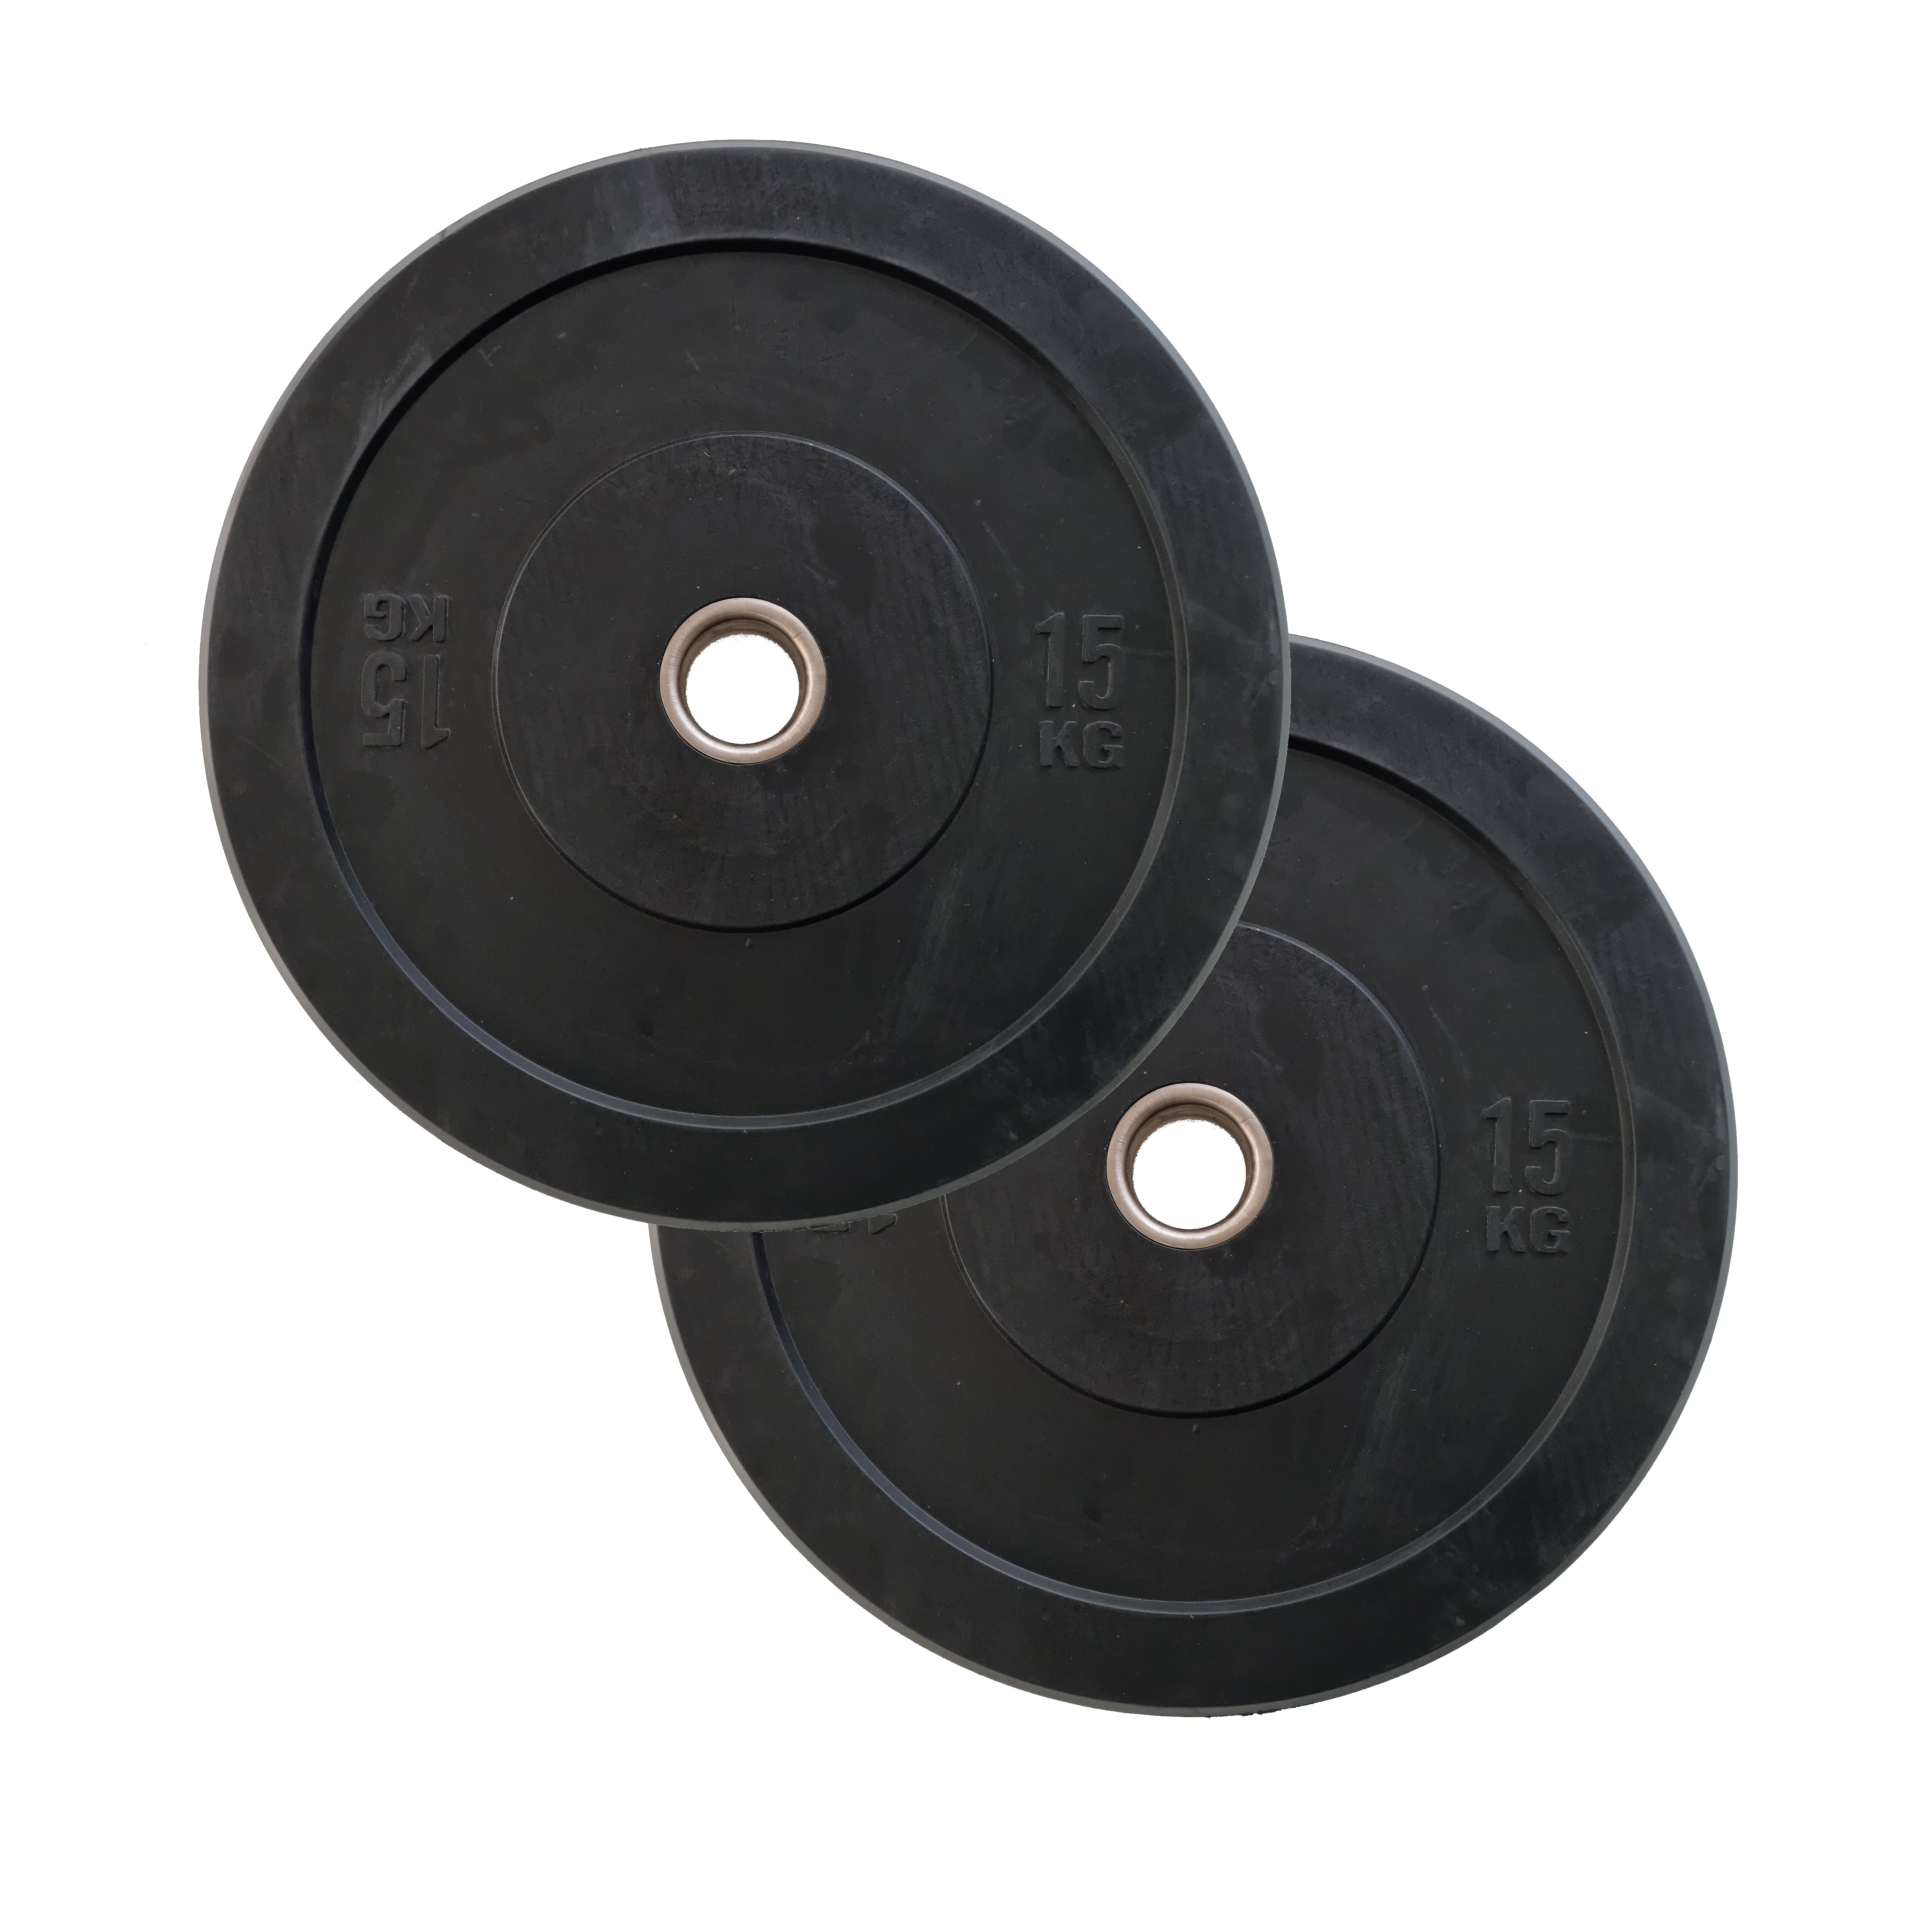 Black Bumper Plates 5-20kg | Fitness Equipment Dublin 15kg Pair